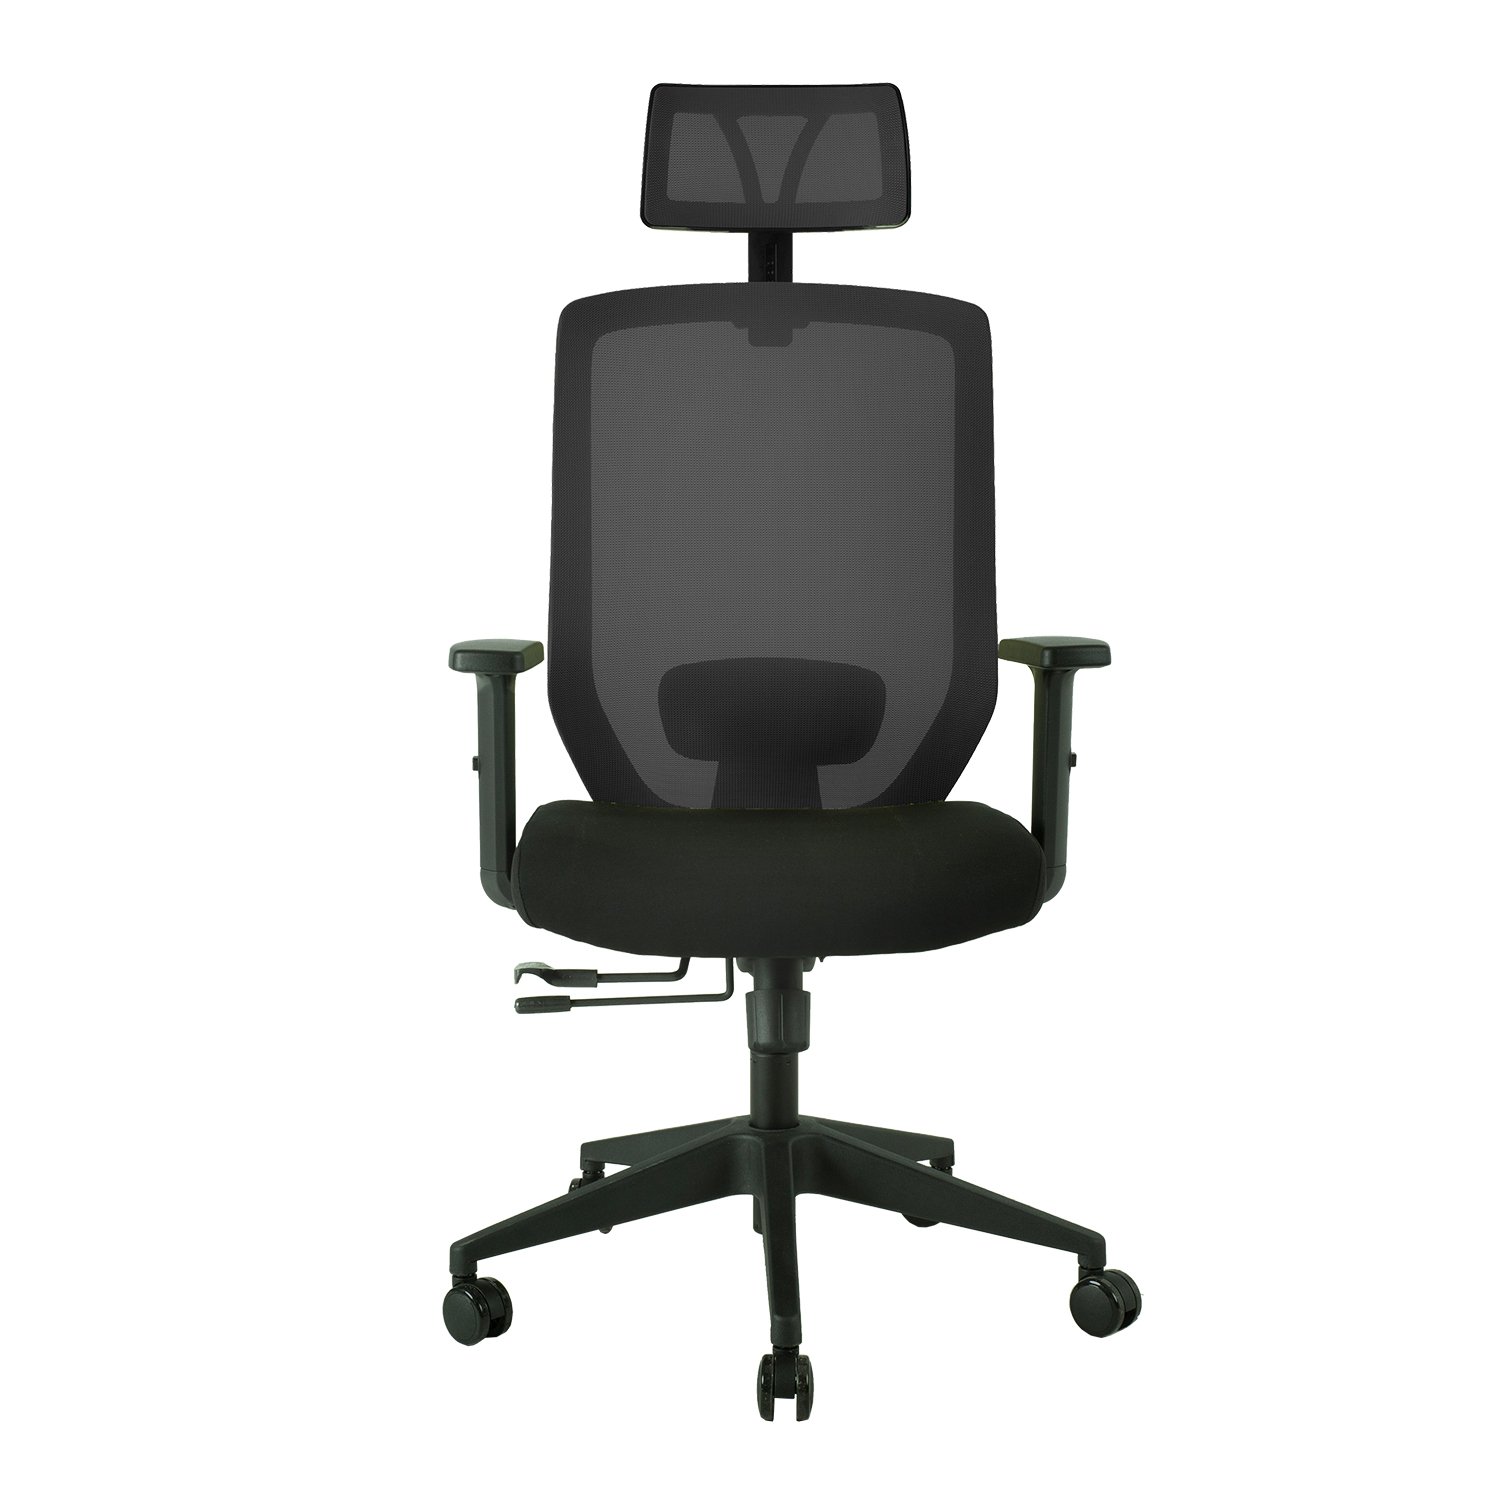 Biuro kėdė JOY, 64x64x115-125cm, juoda - 1